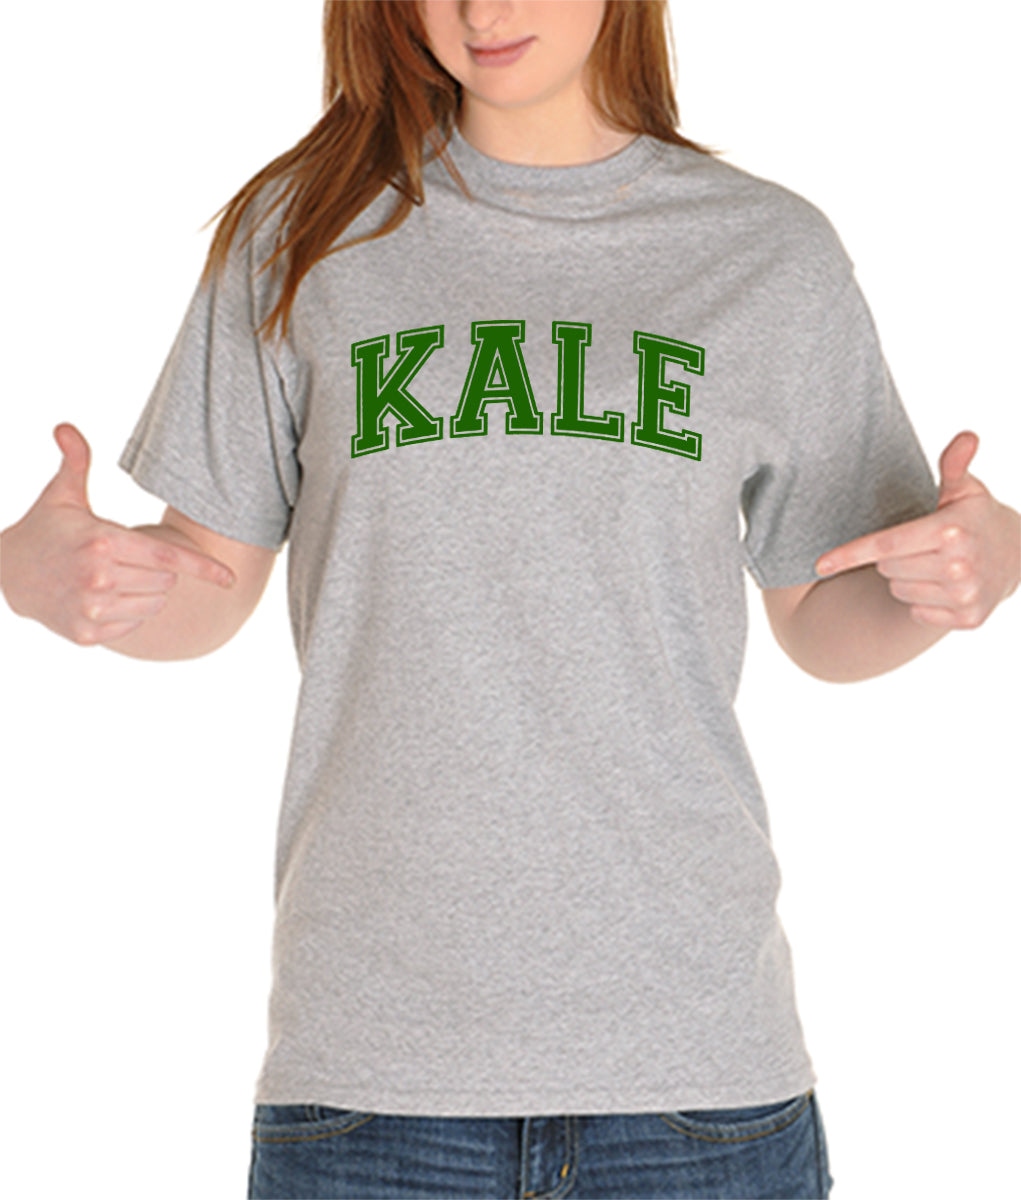 Kale -  Kale Girl's T-Shirt